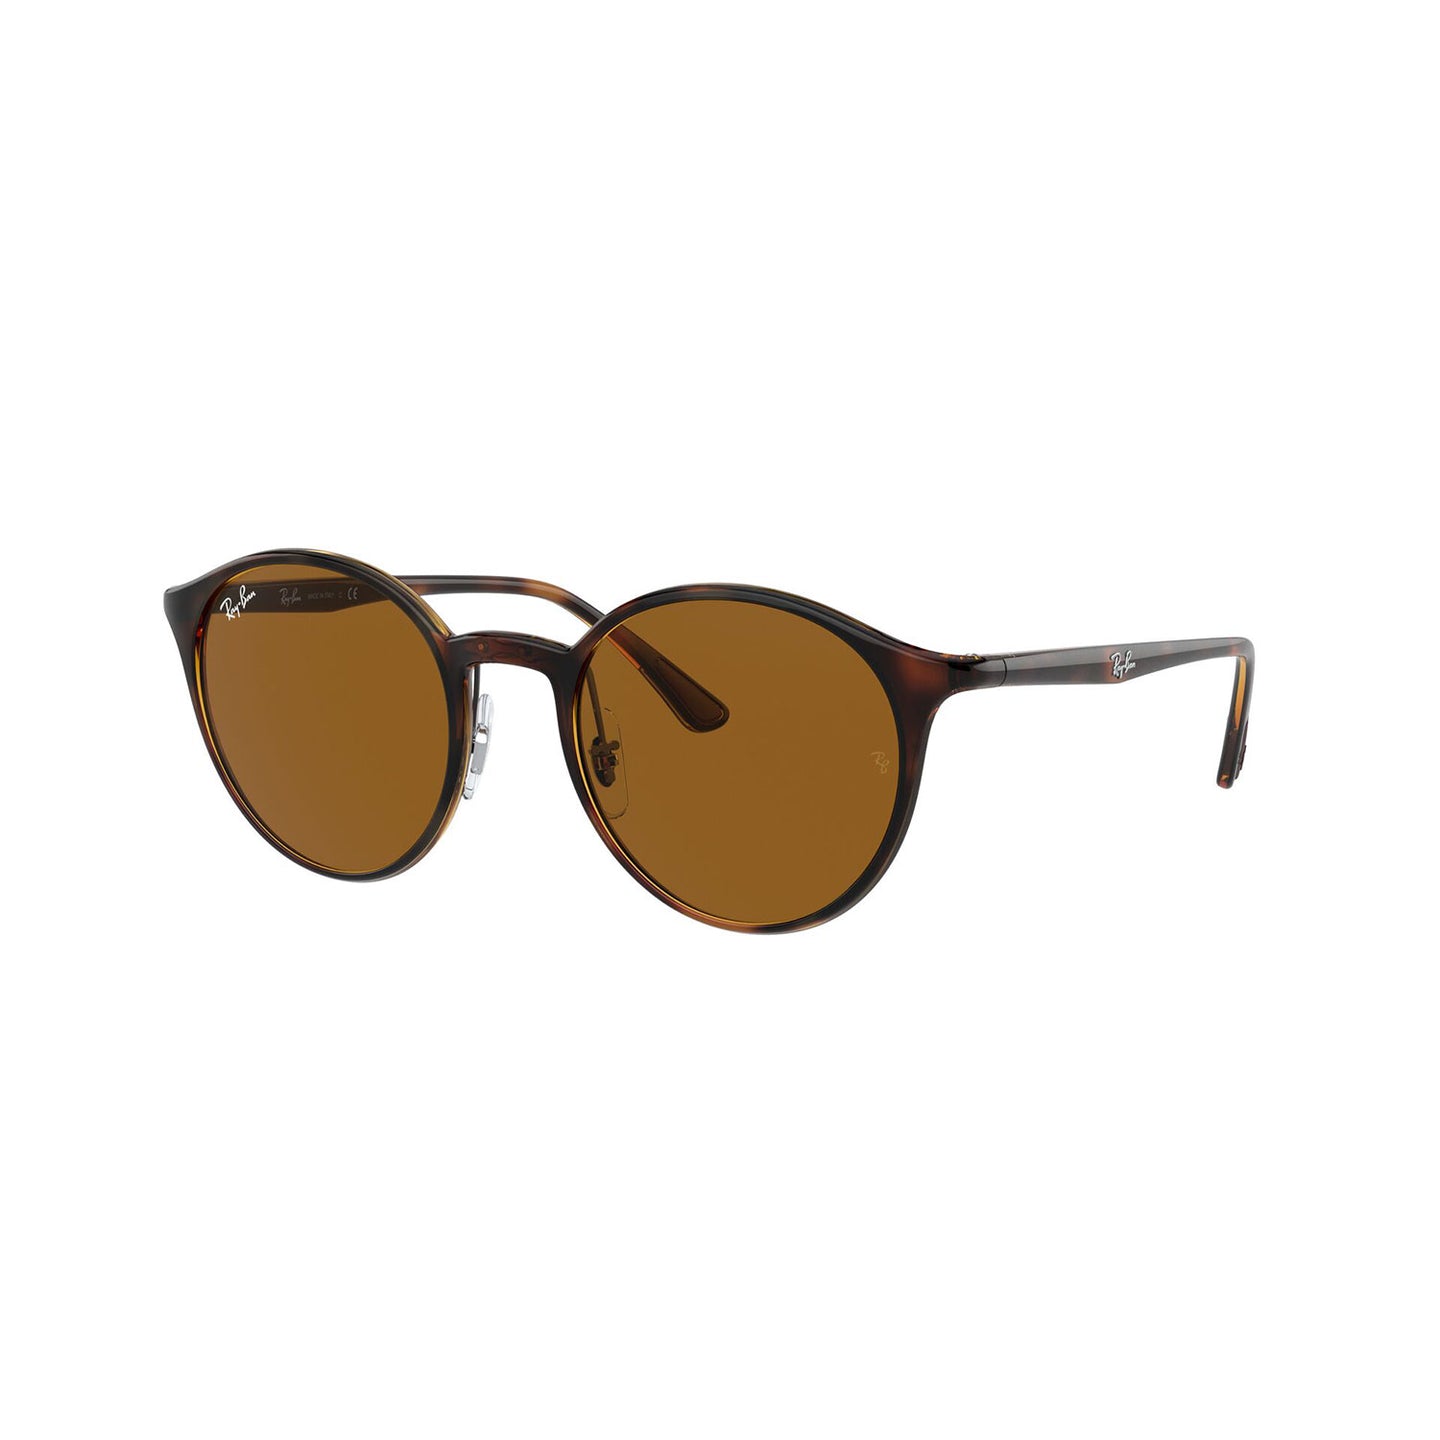 sunglasses ray ban model rb 4336 color 710/33 havana